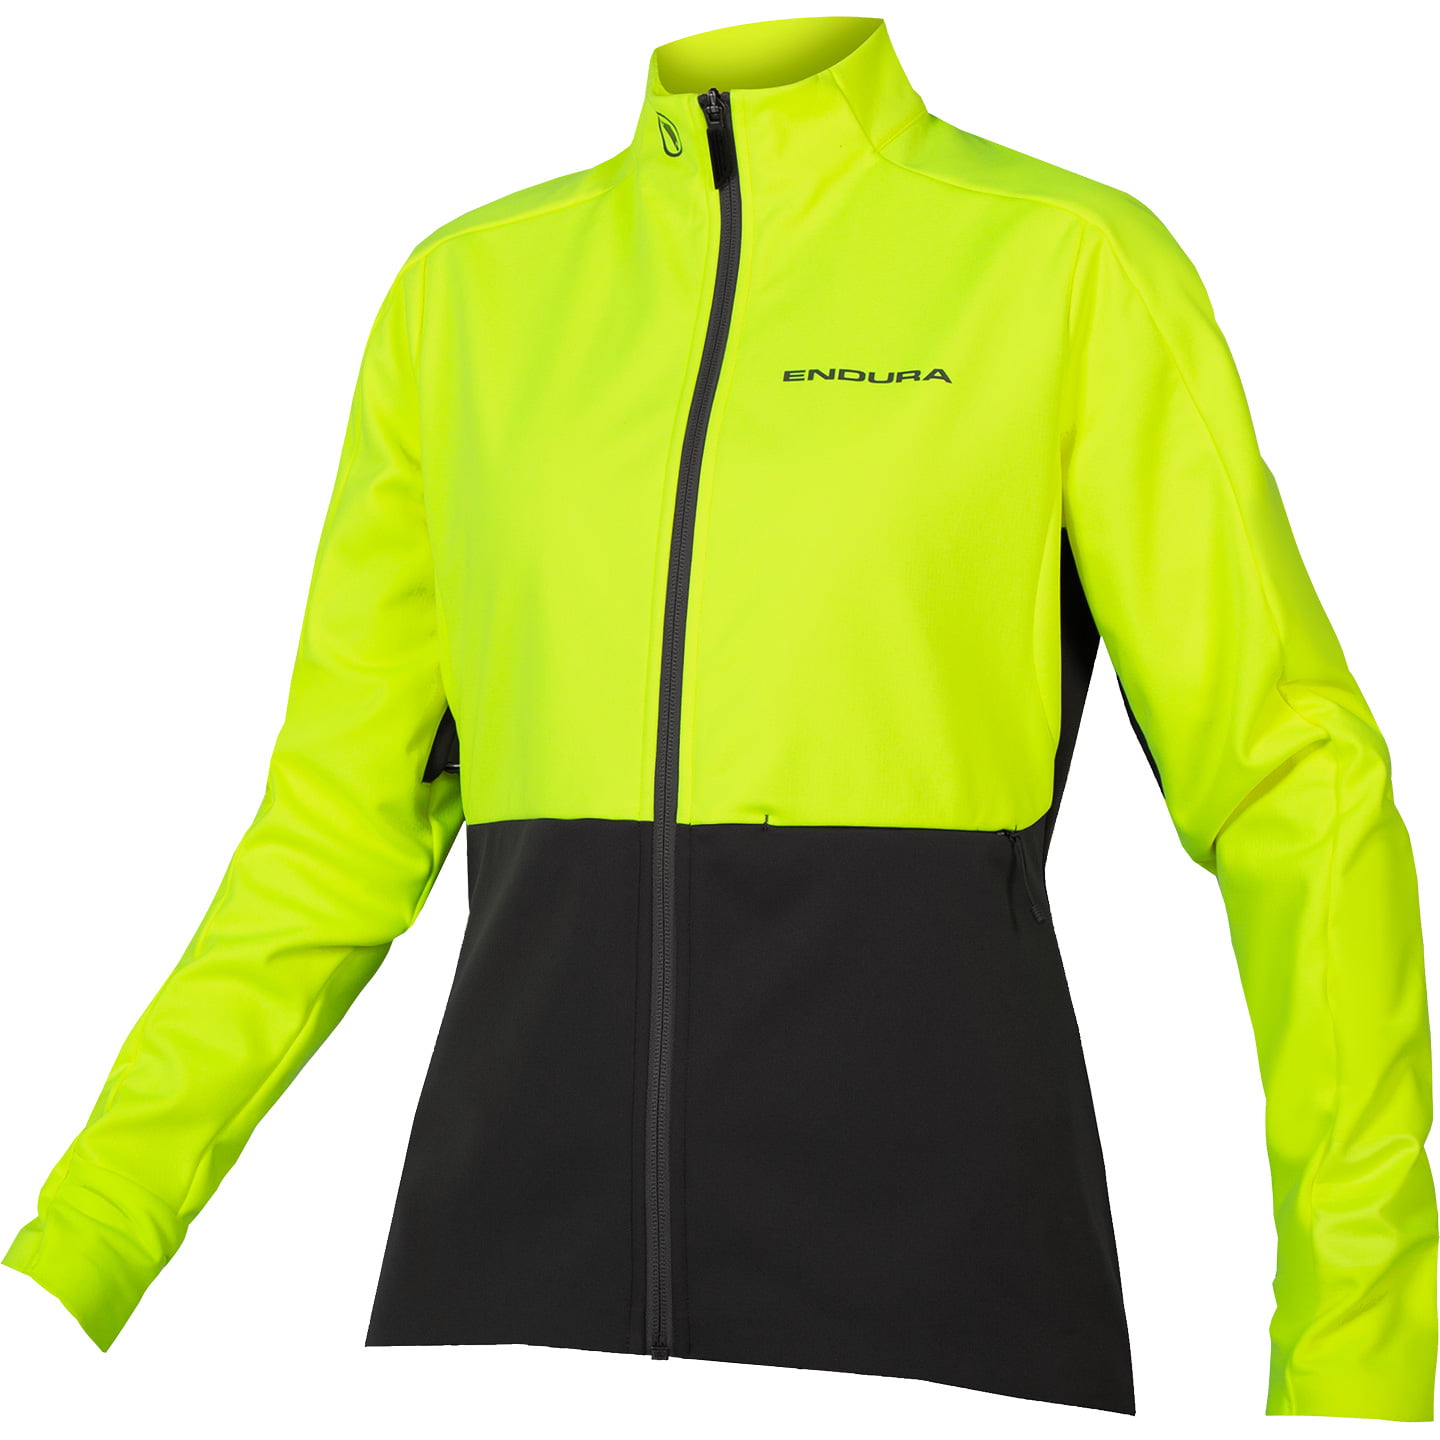 ENDURA Windchill Women’s Winter Jacket Women’s Thermal Jacket, size M, Cycle jacket, Cycling clothing